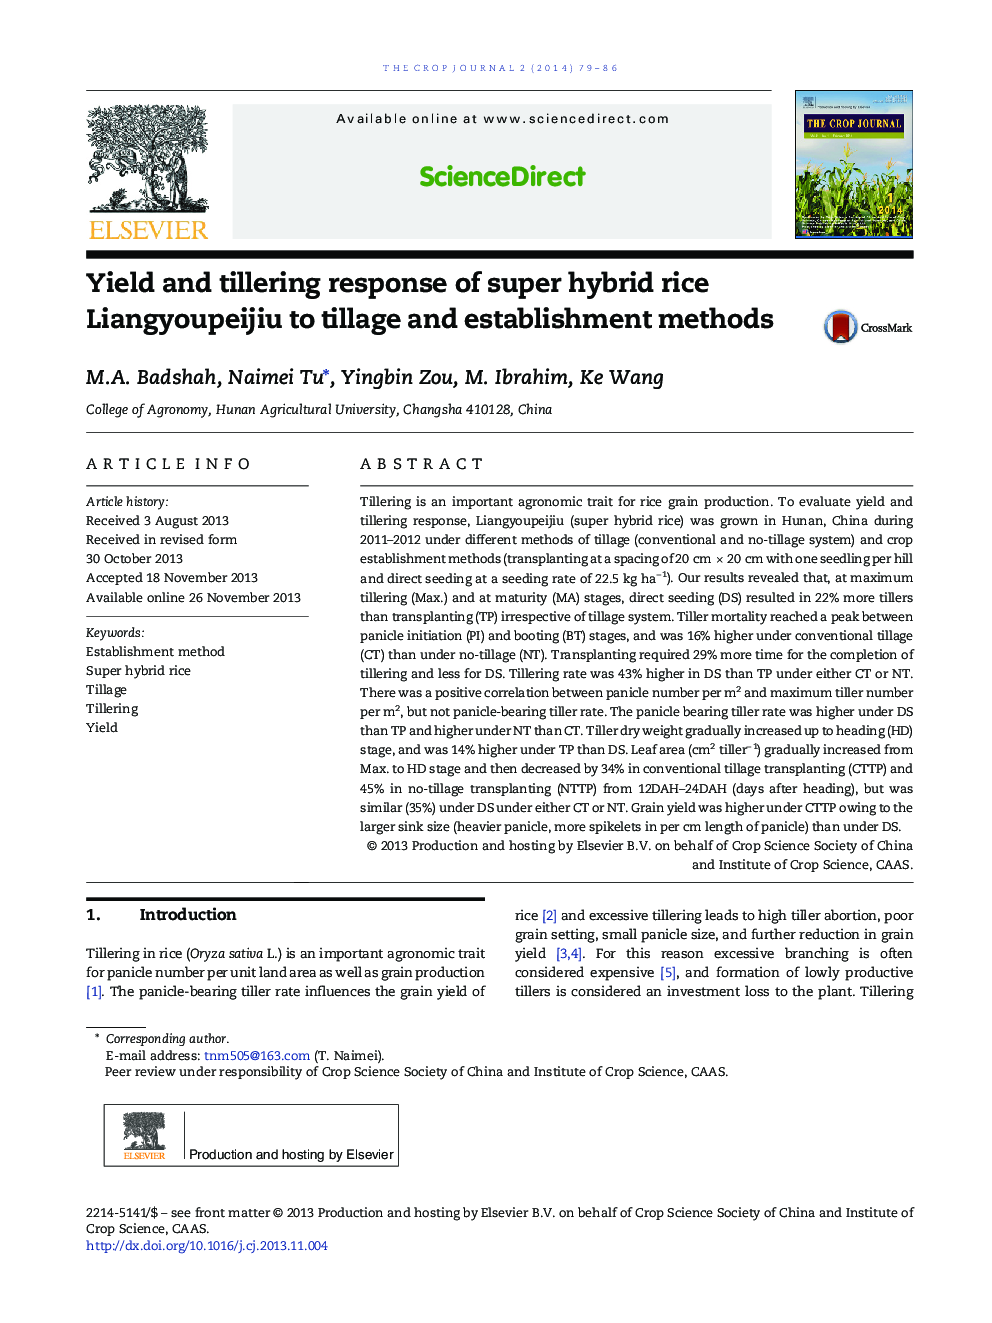 Yield and tillering response of super hybrid rice Liangyoupeijiu to tillage and establishment methods 